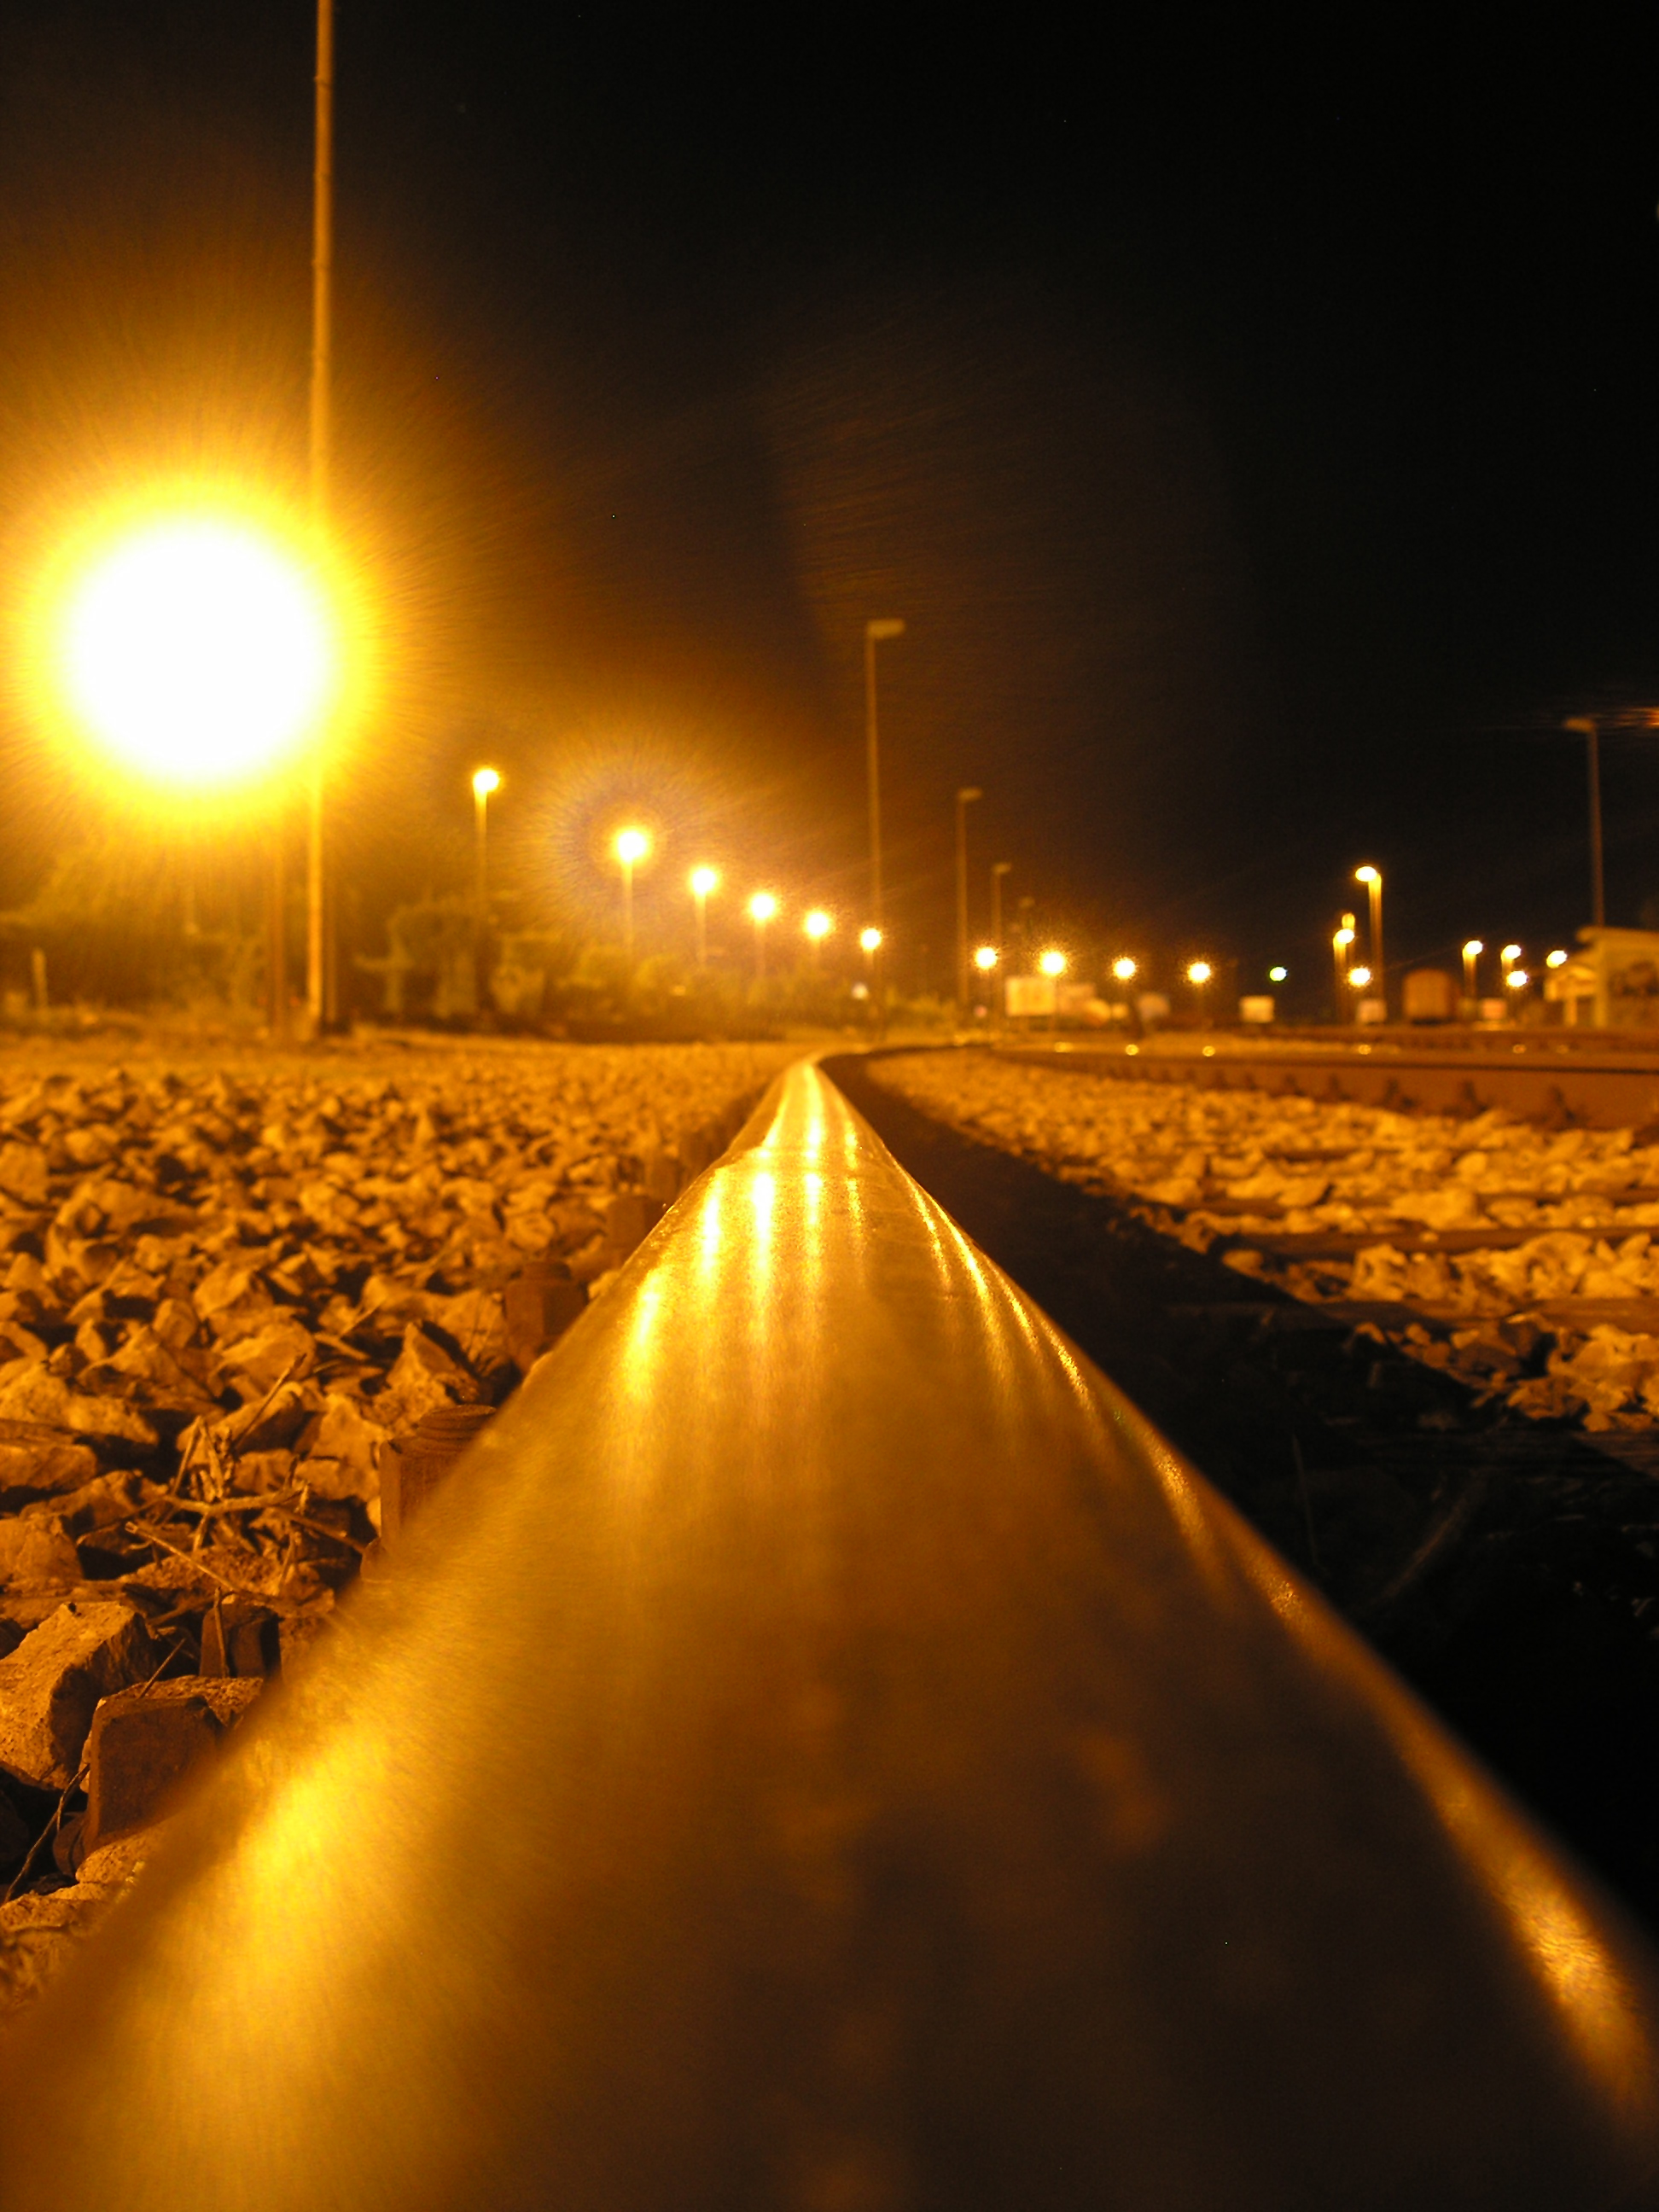 File:Railway track by night.jpg - Wikimedia Commons